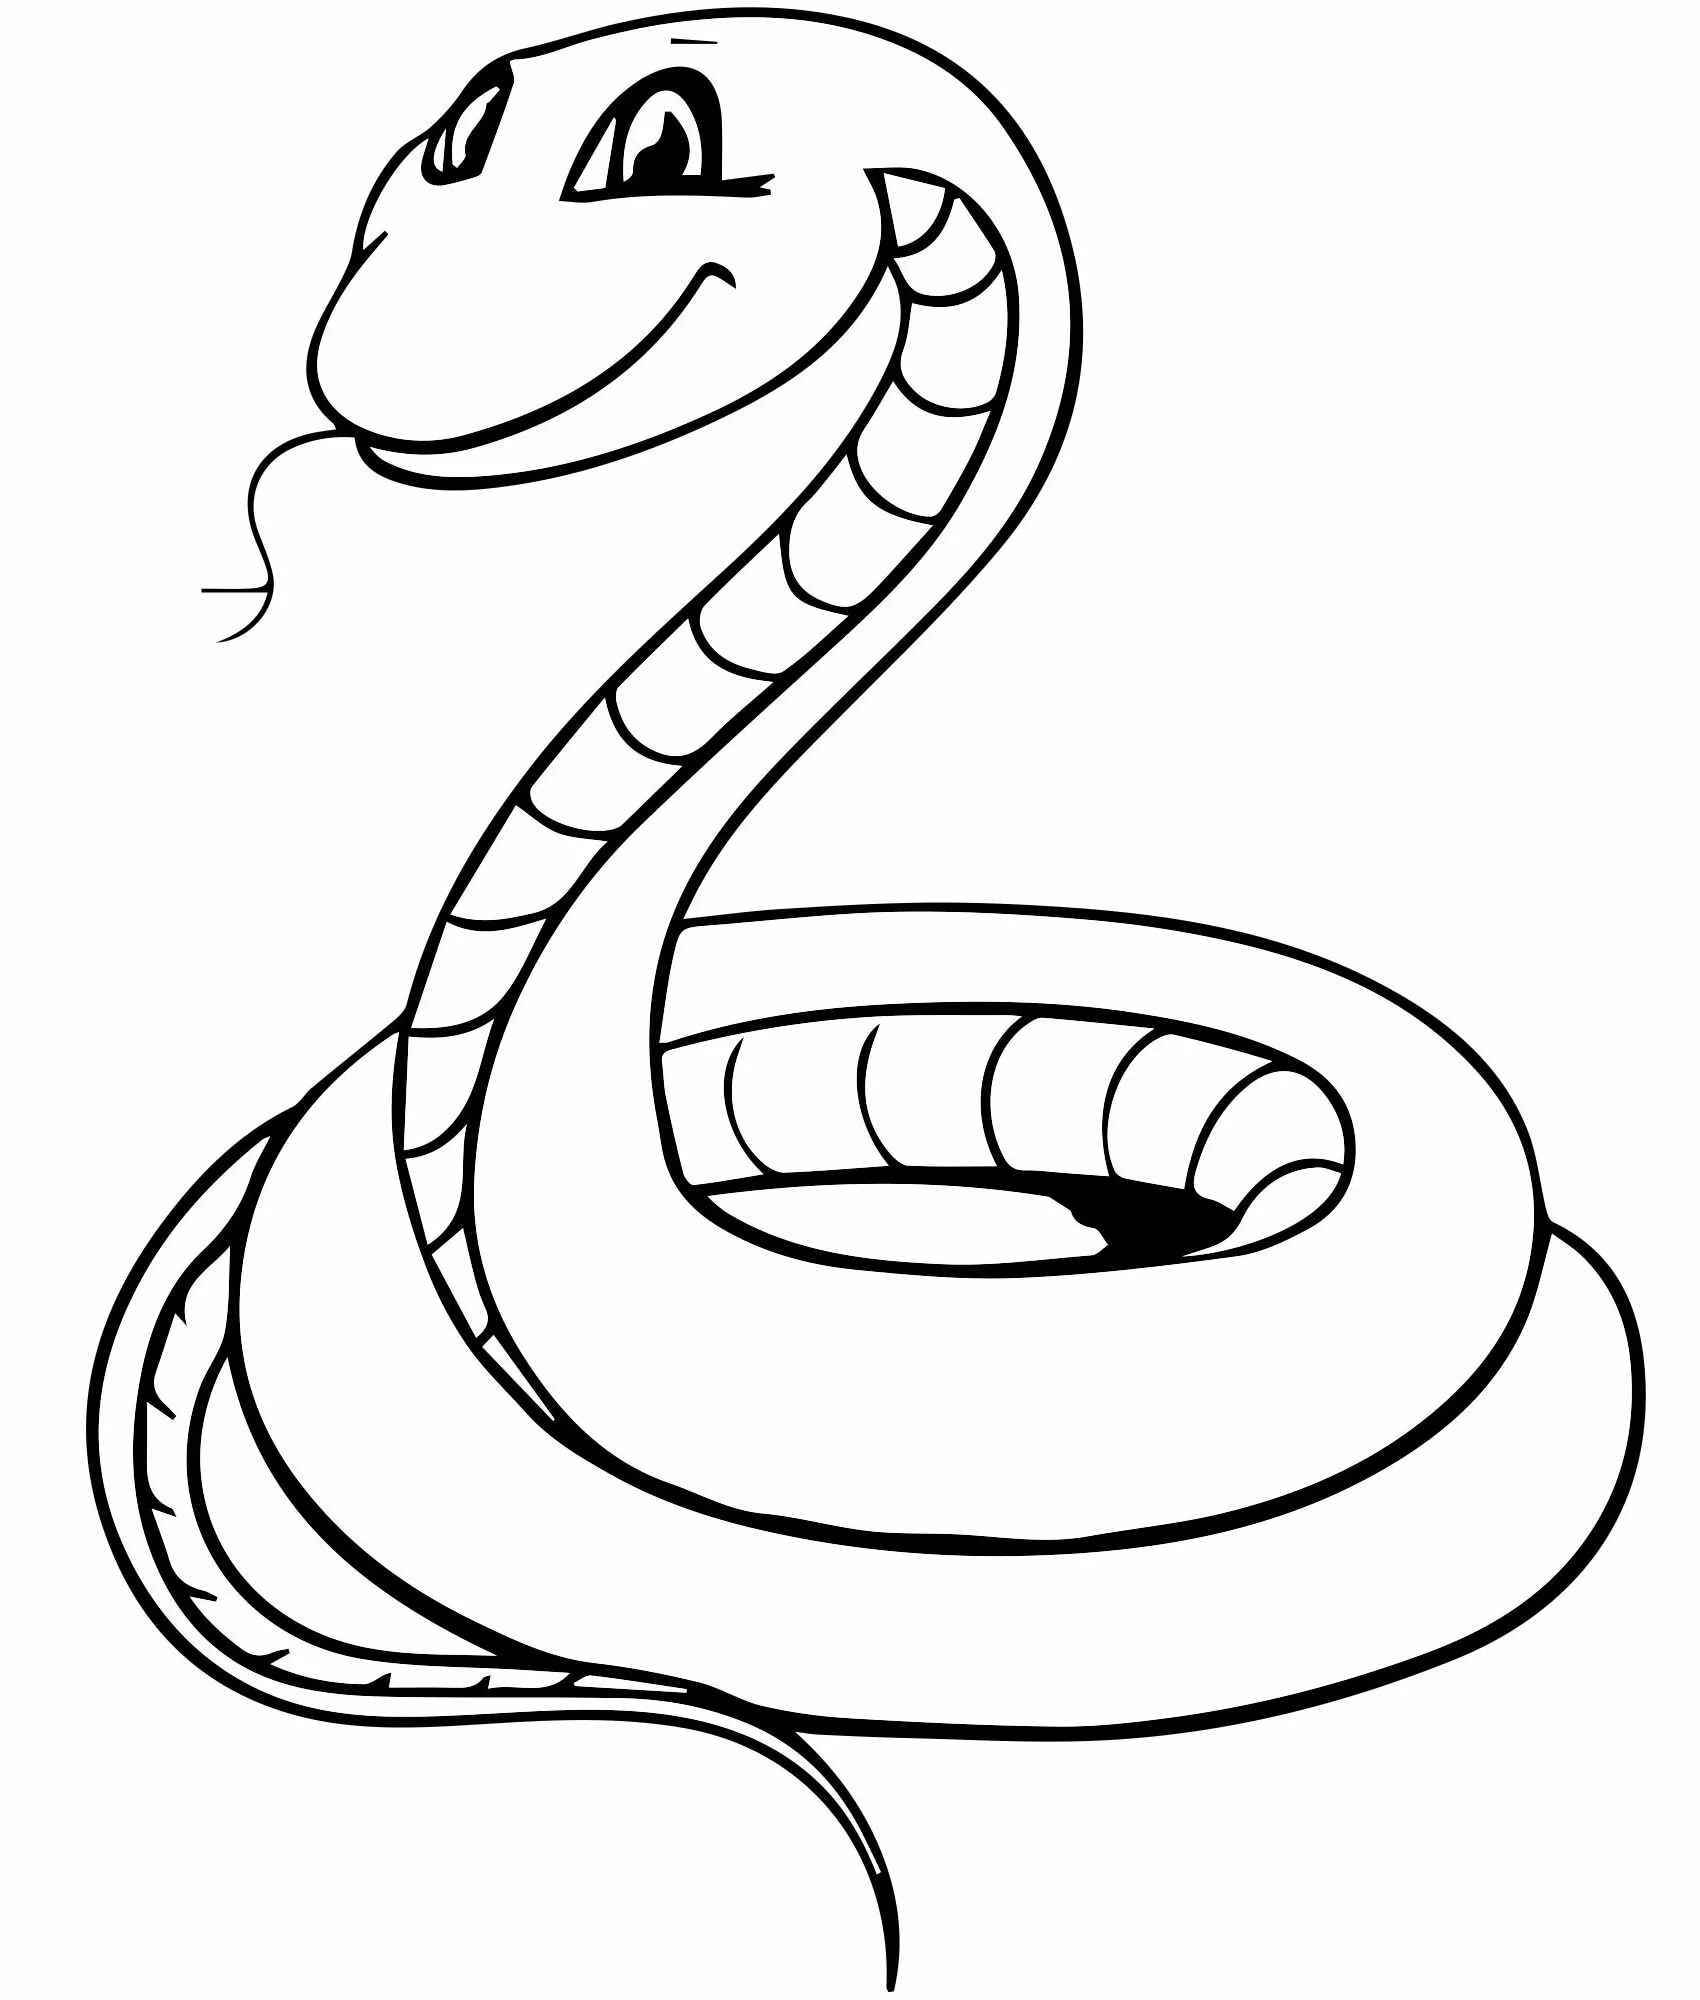 Раскраска змей для детей. Змея раскраска для детей. Раскраска змеи для детей. Раскраска о змеях. Змея картинка раскраска.